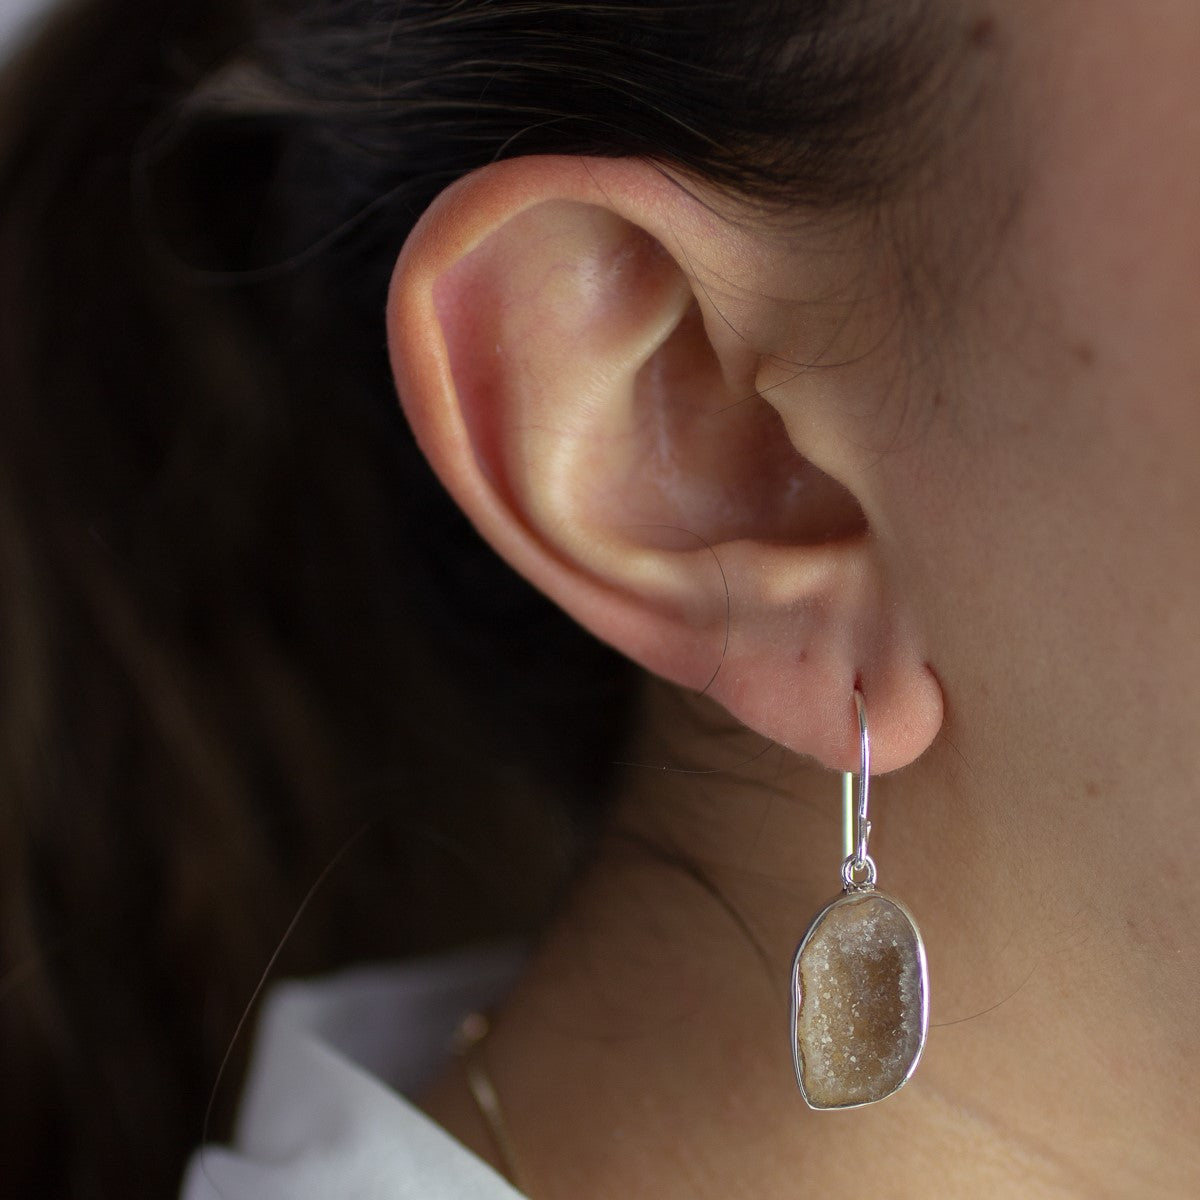 Agate Geode Drop Earrings